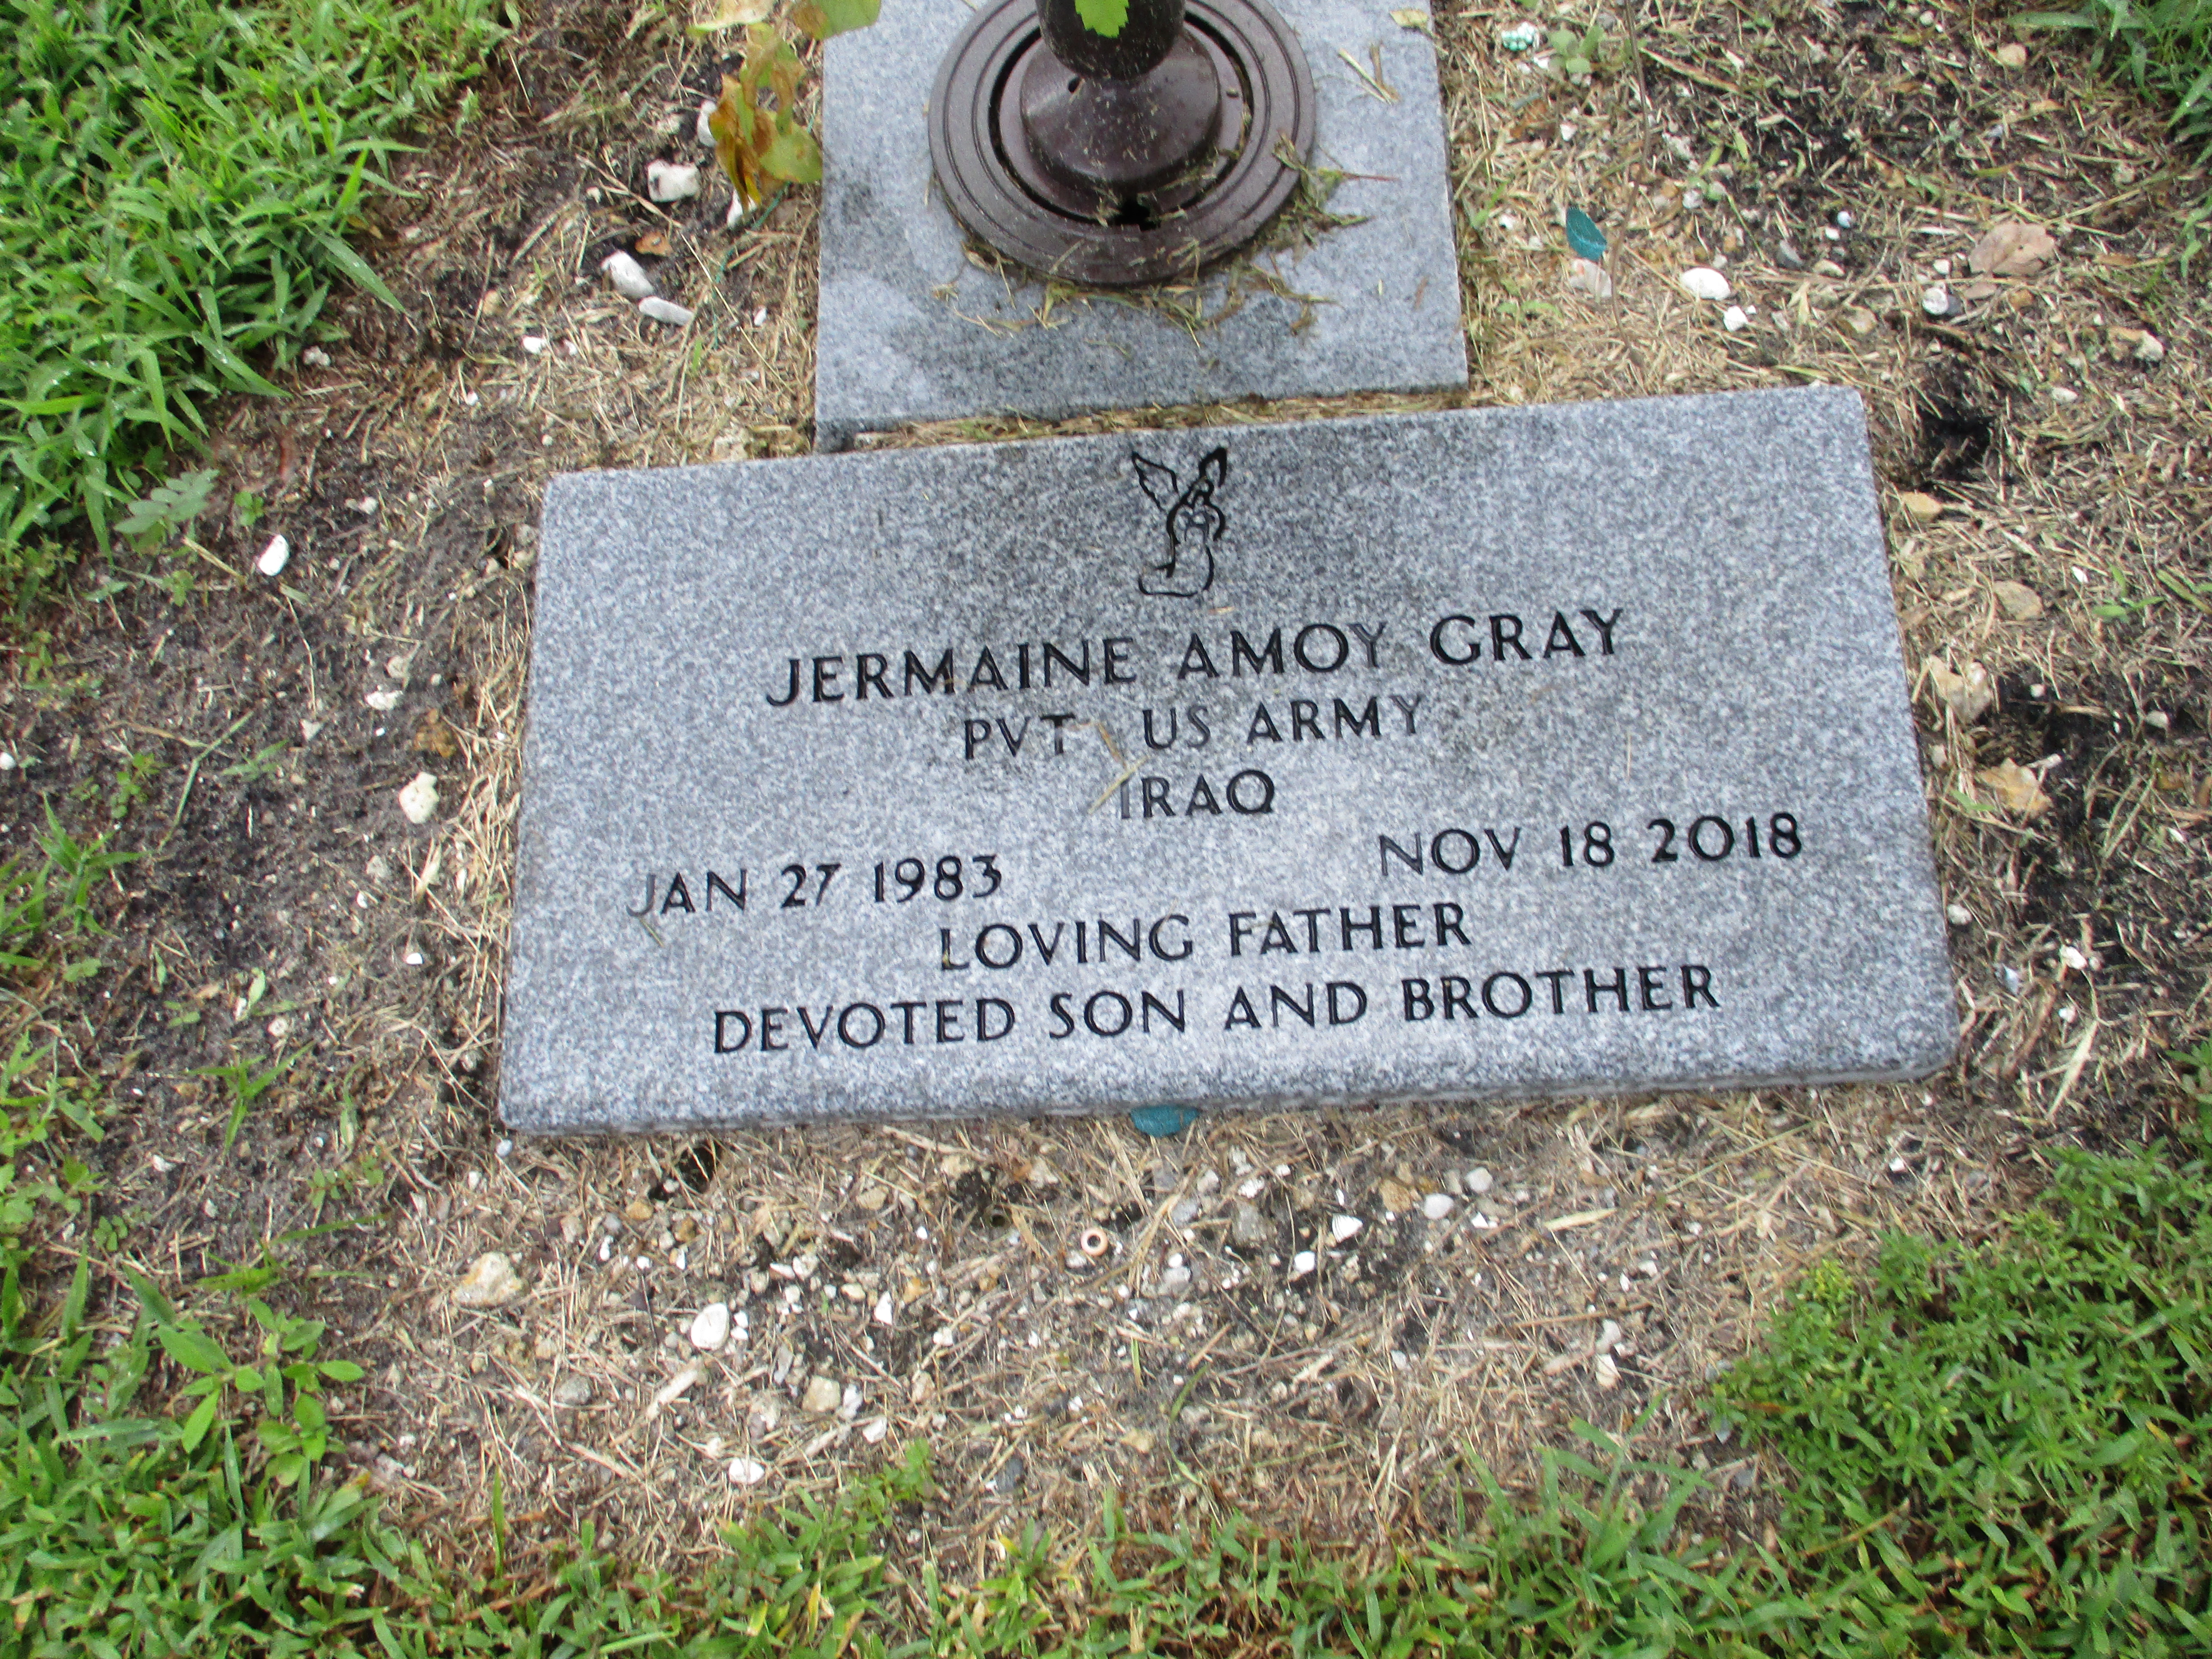 Jermaine Amoy Gray